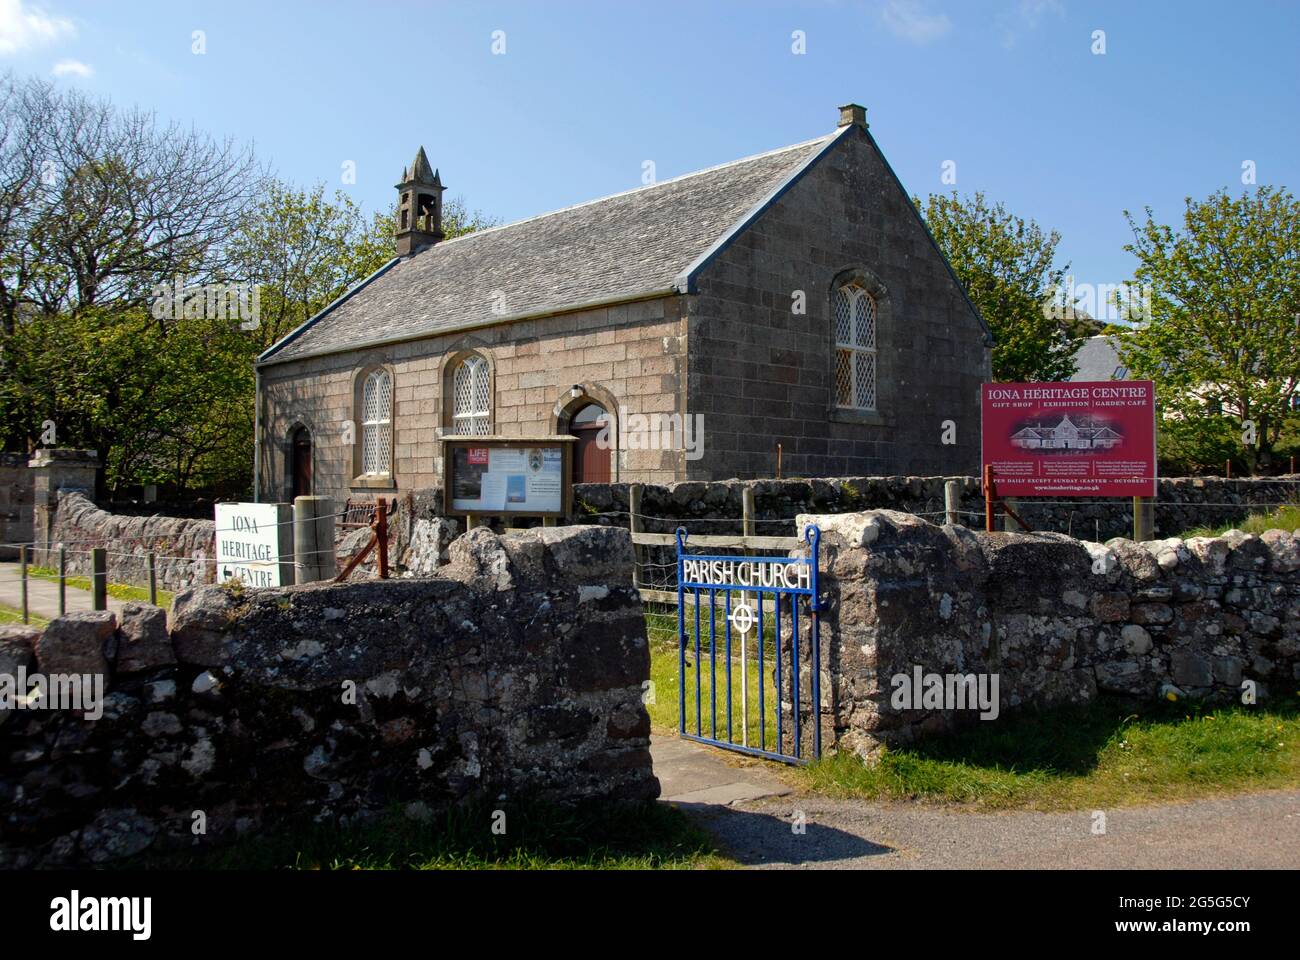 Parish church, Iona, Scotland Stock Photo